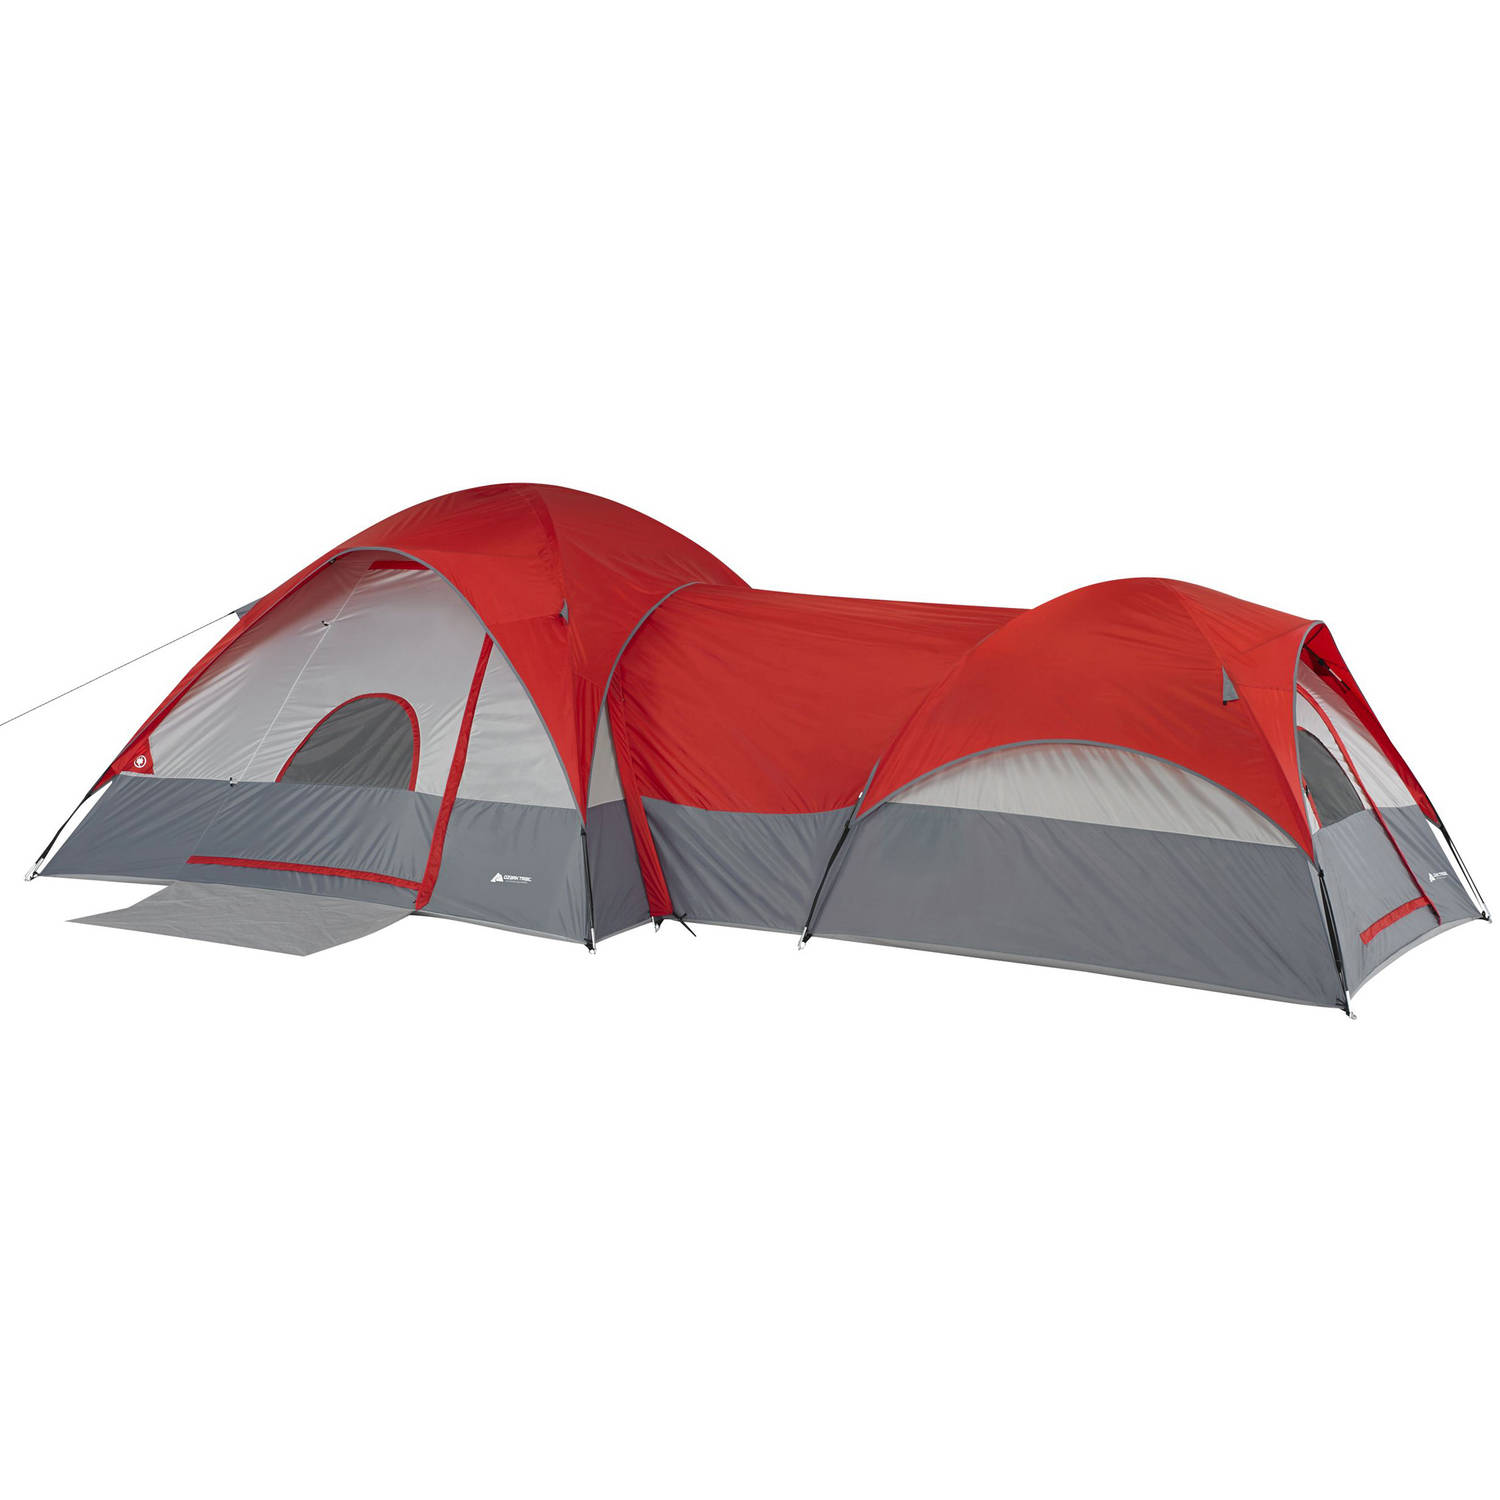 Ozark Trail 8-Person Dome Tent - image 1 of 2